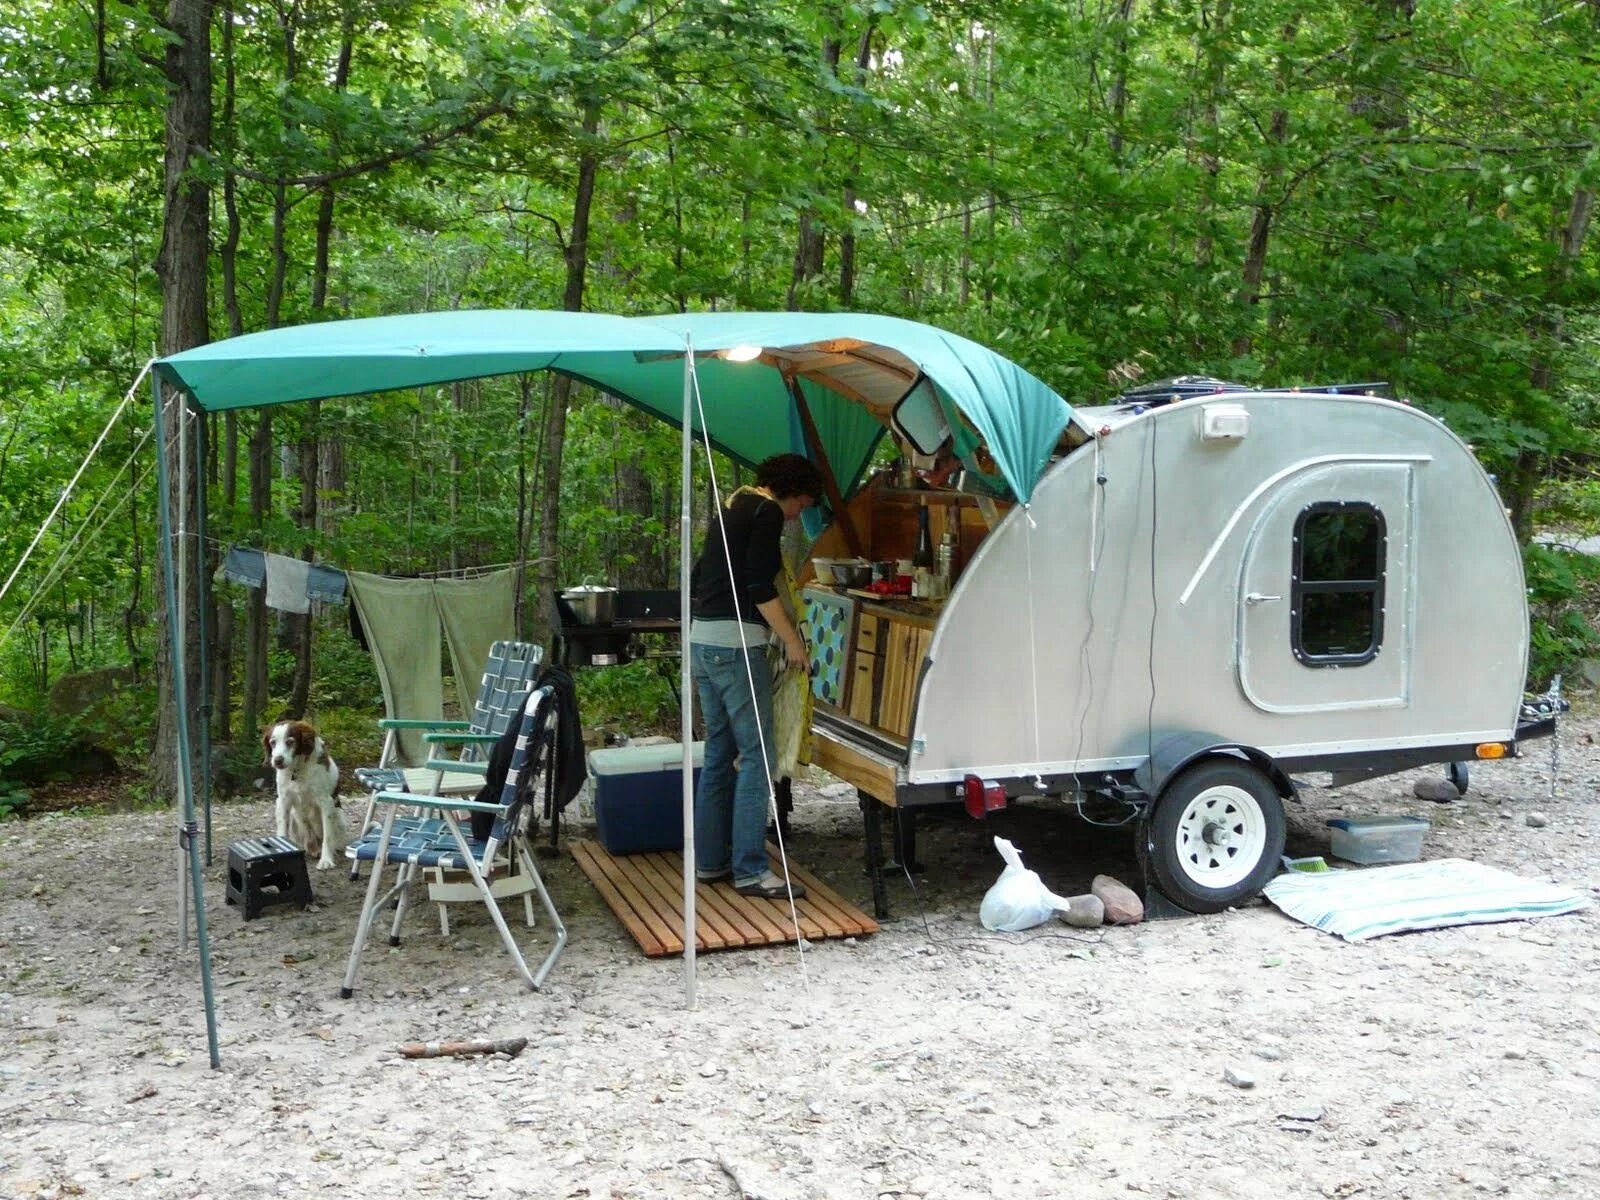 Прицеп-дача Coleman Caravan, 2000 прицеп палатка масса. Mini Camper Tent Trailer. Прицеп-дача кемпер Урал турист. Прицеп Max Trailer 1997 для кемпинга. Недорогой кемпинг